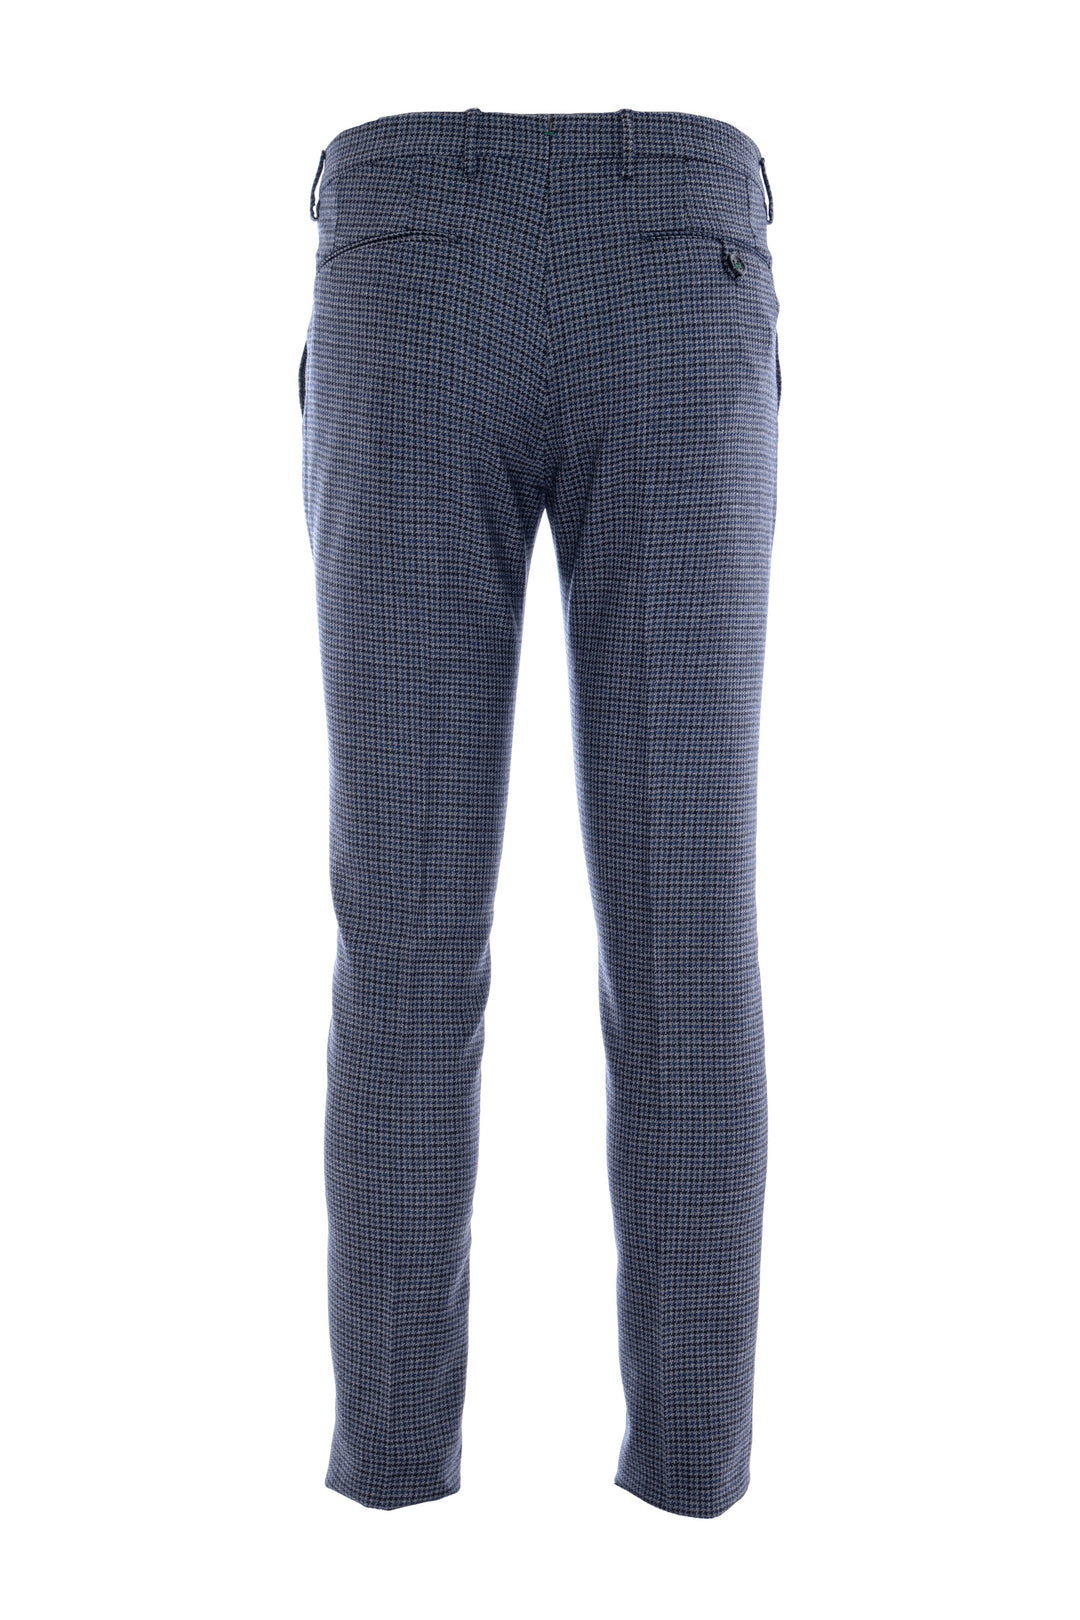 BERWICH Pantalone pied de poule grigio in lana vergine stretch con una pince - Mancinelli 1954